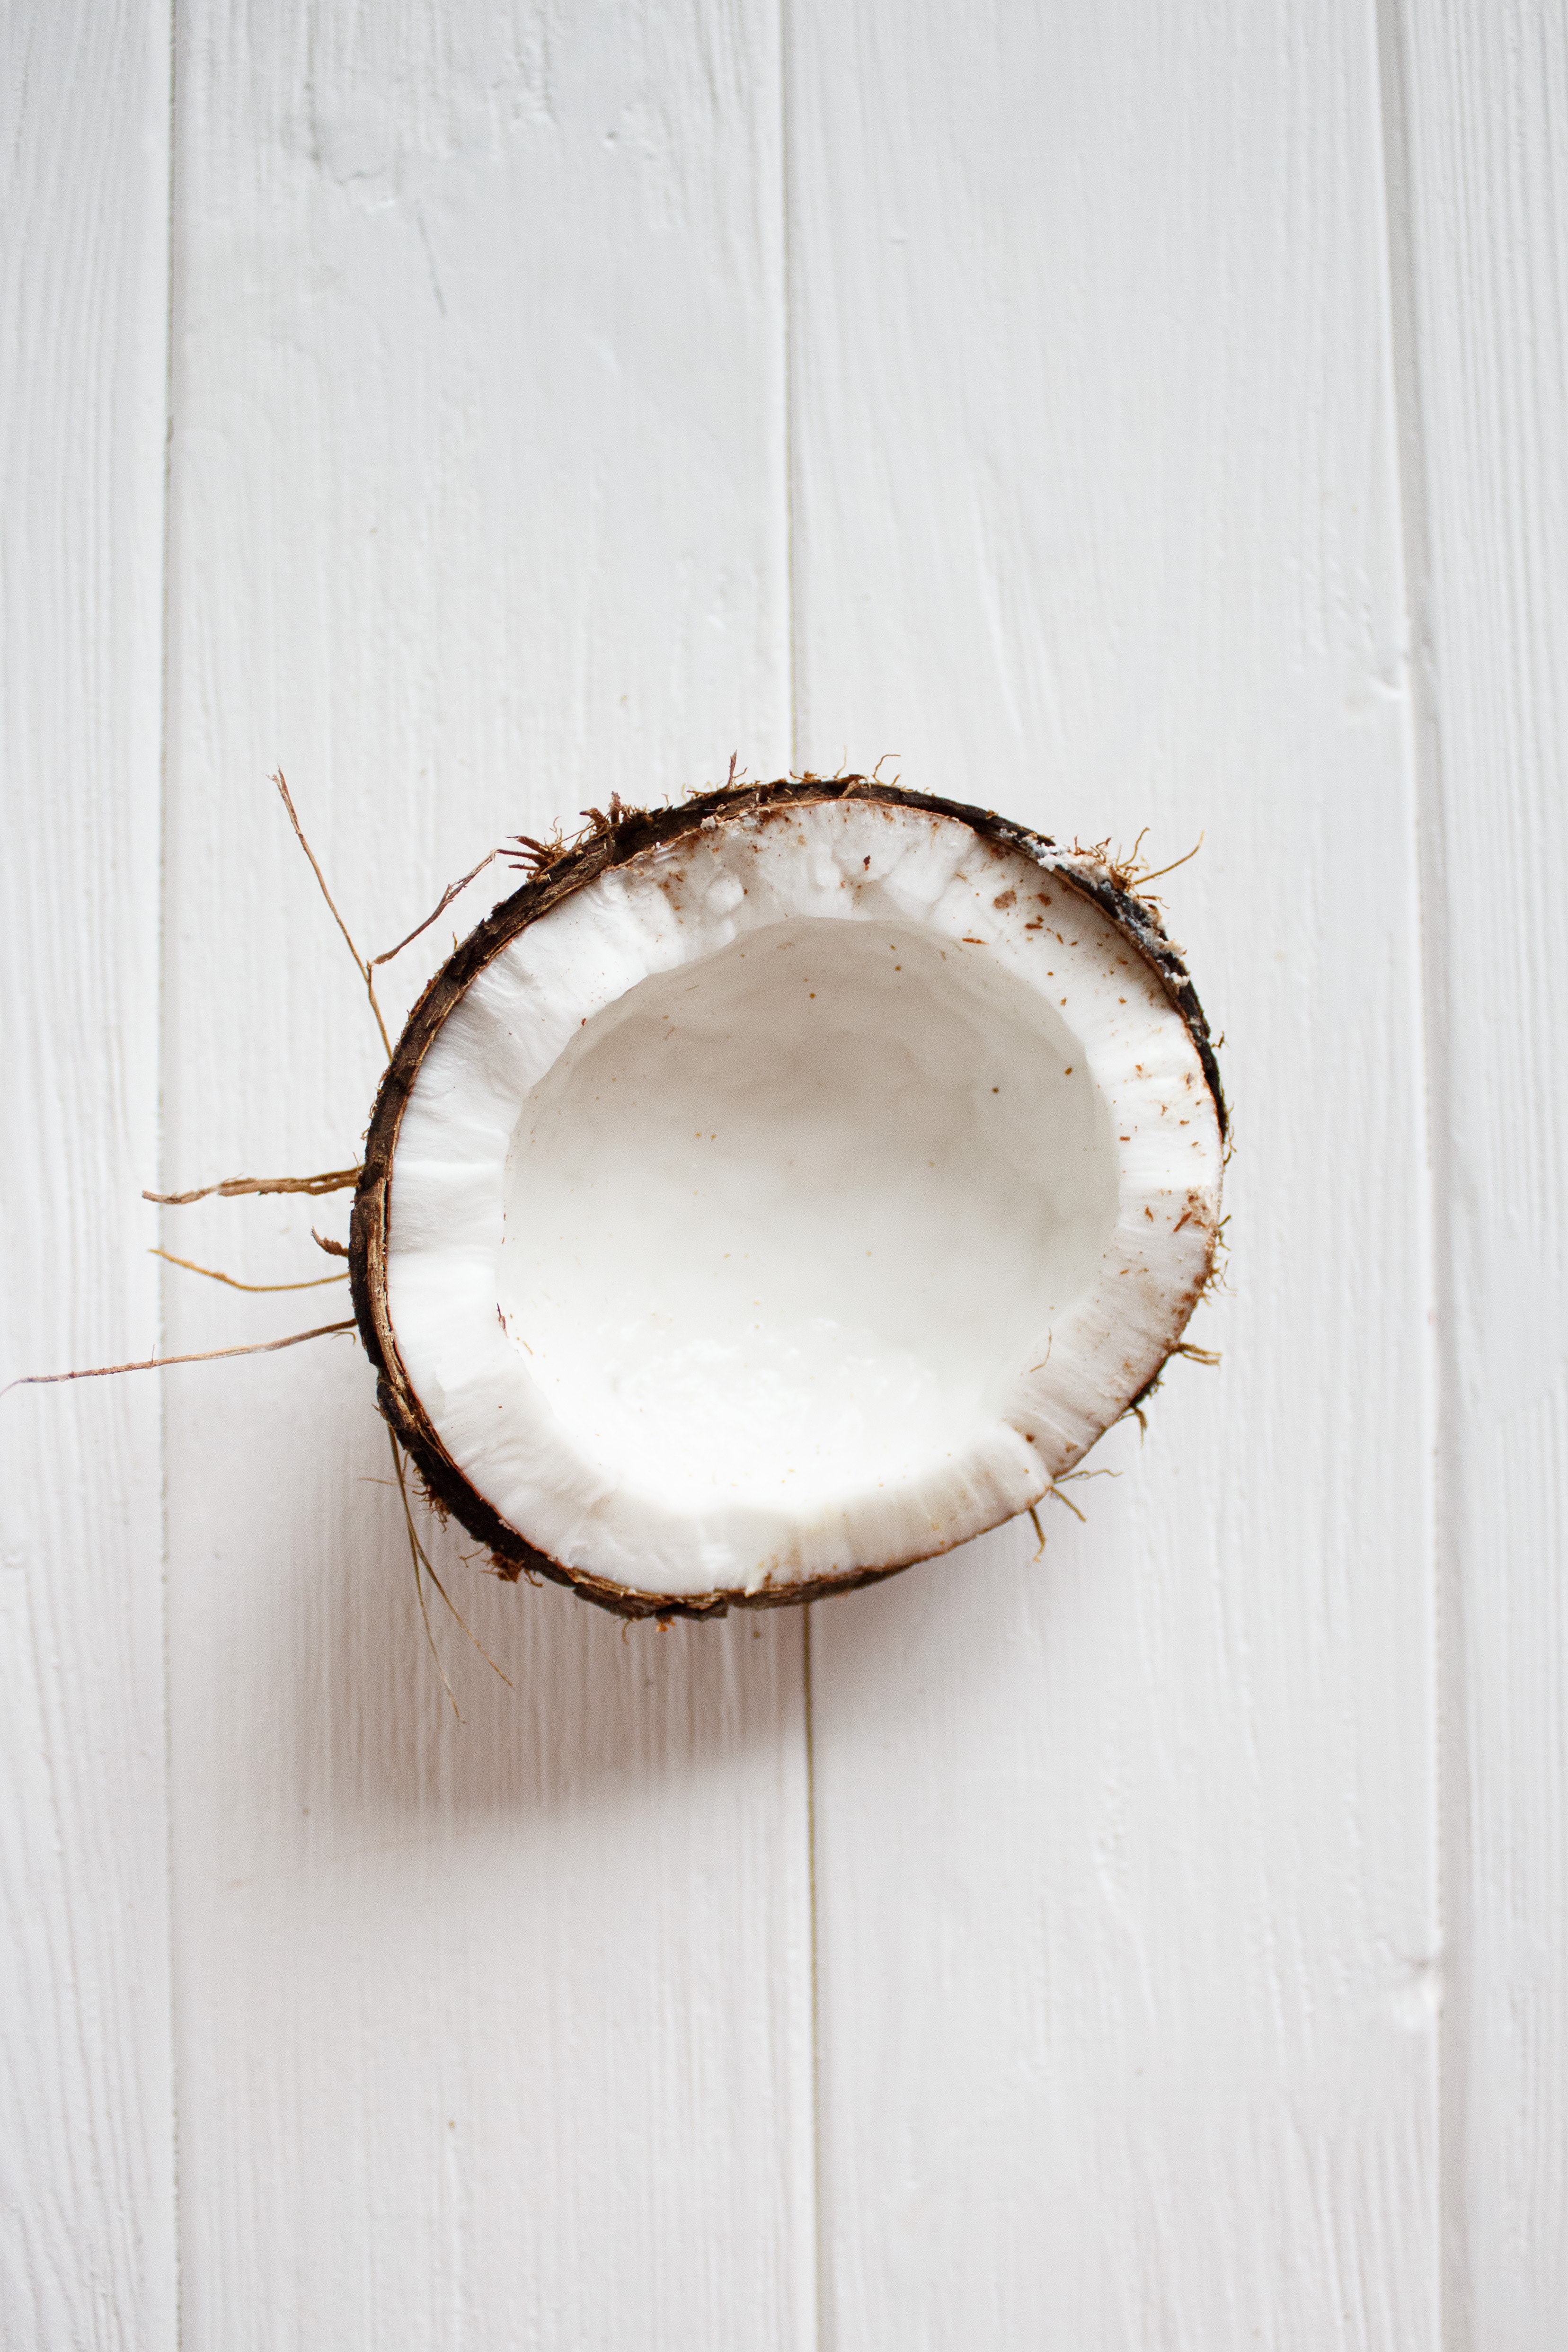 coconut random img